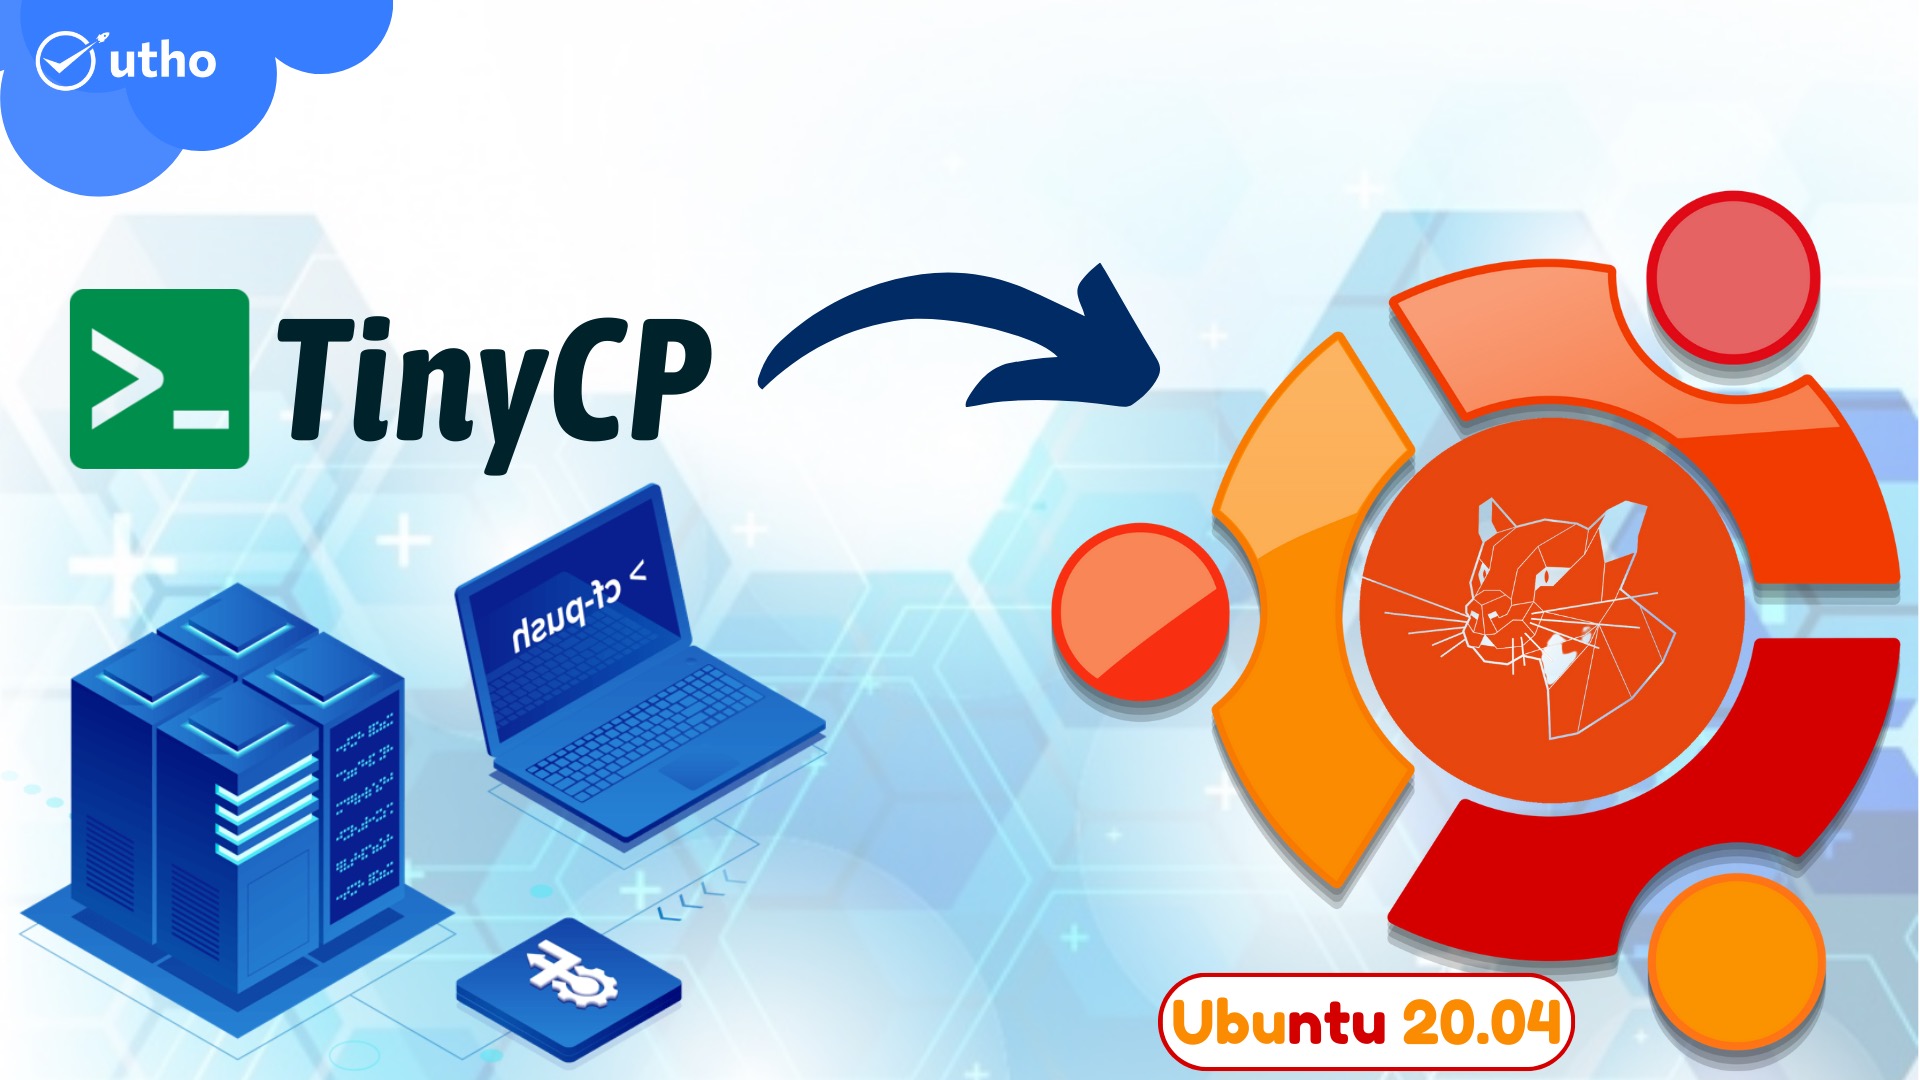 How to Install TinyCP on Ubuntu 20.04